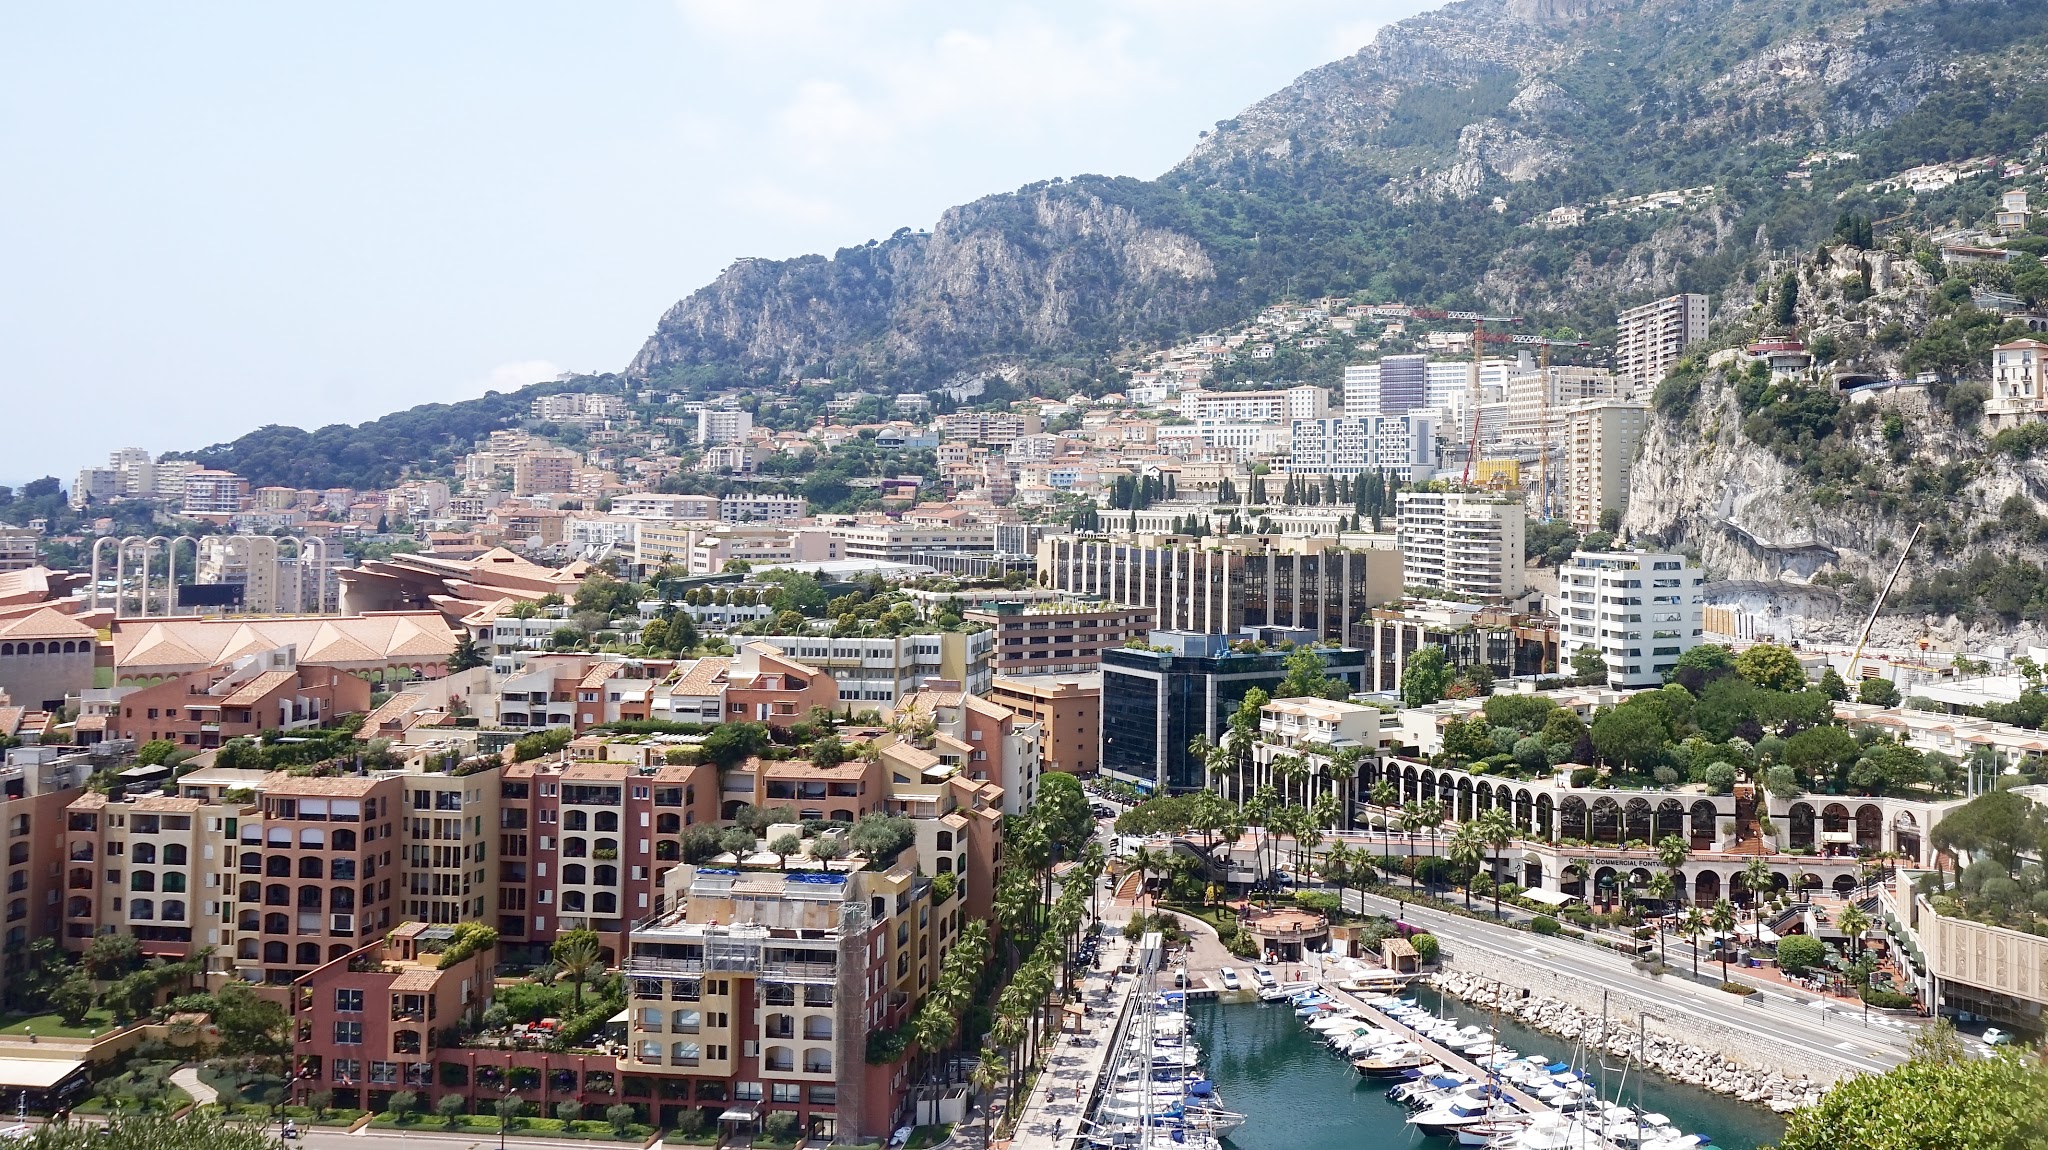 view across rooftops of Monaco